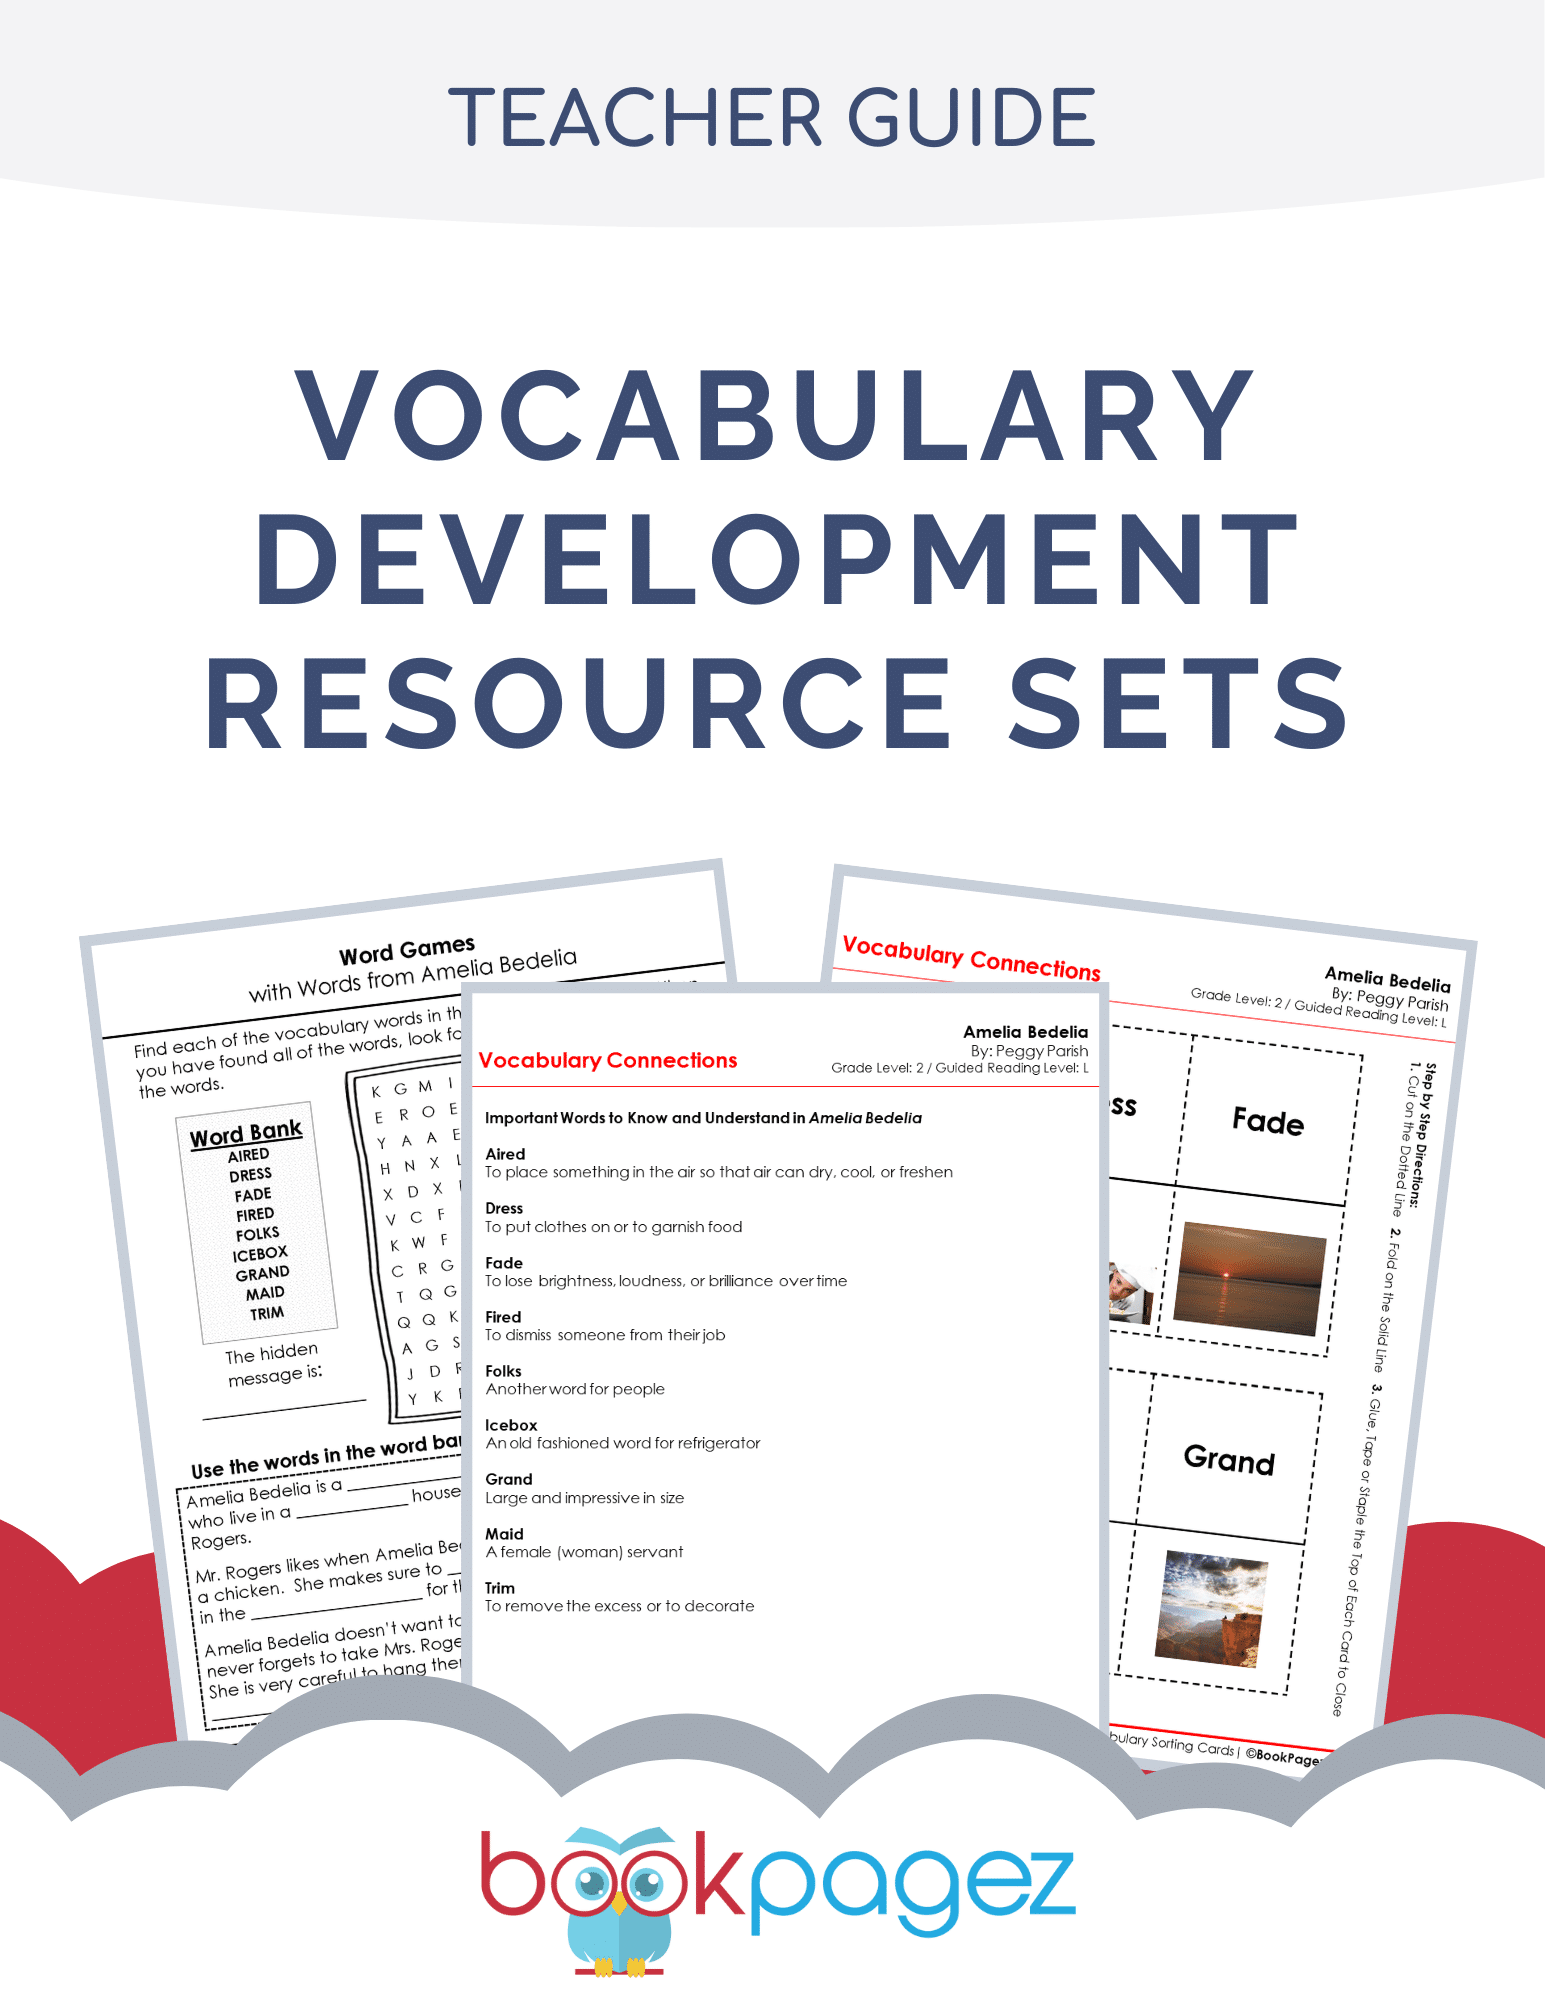 Cover for the Vocabulary Development Resources Teacher Guide